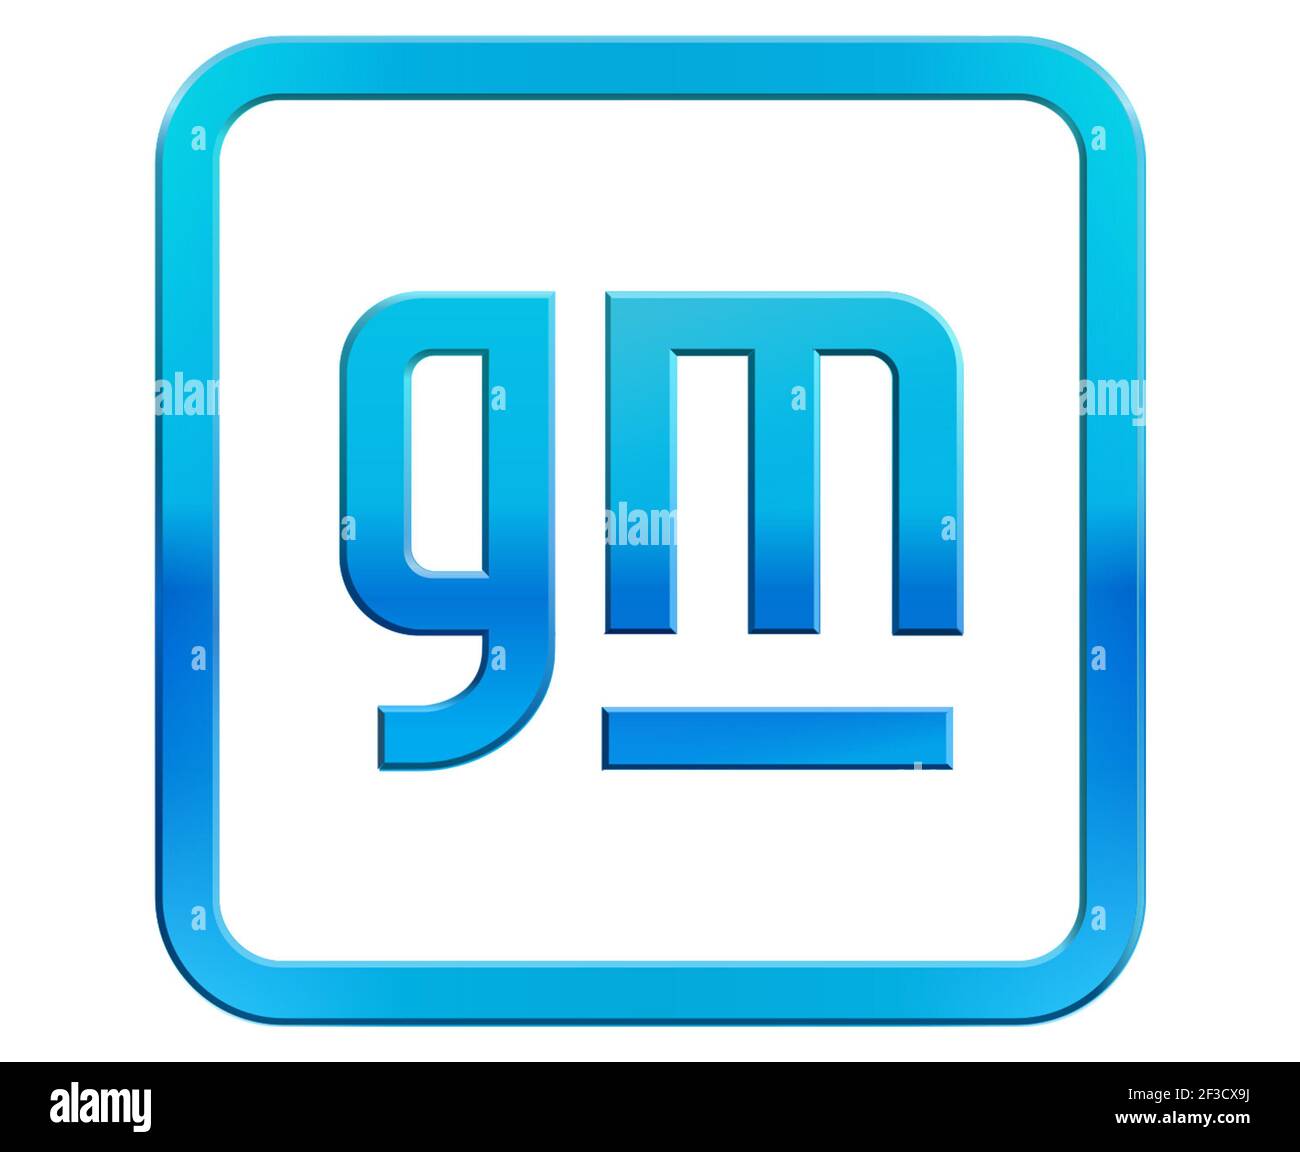 4,966 BEST Gm Logo IMAGES, STOCK PHOTOS & VECTORS, Adobe Stock